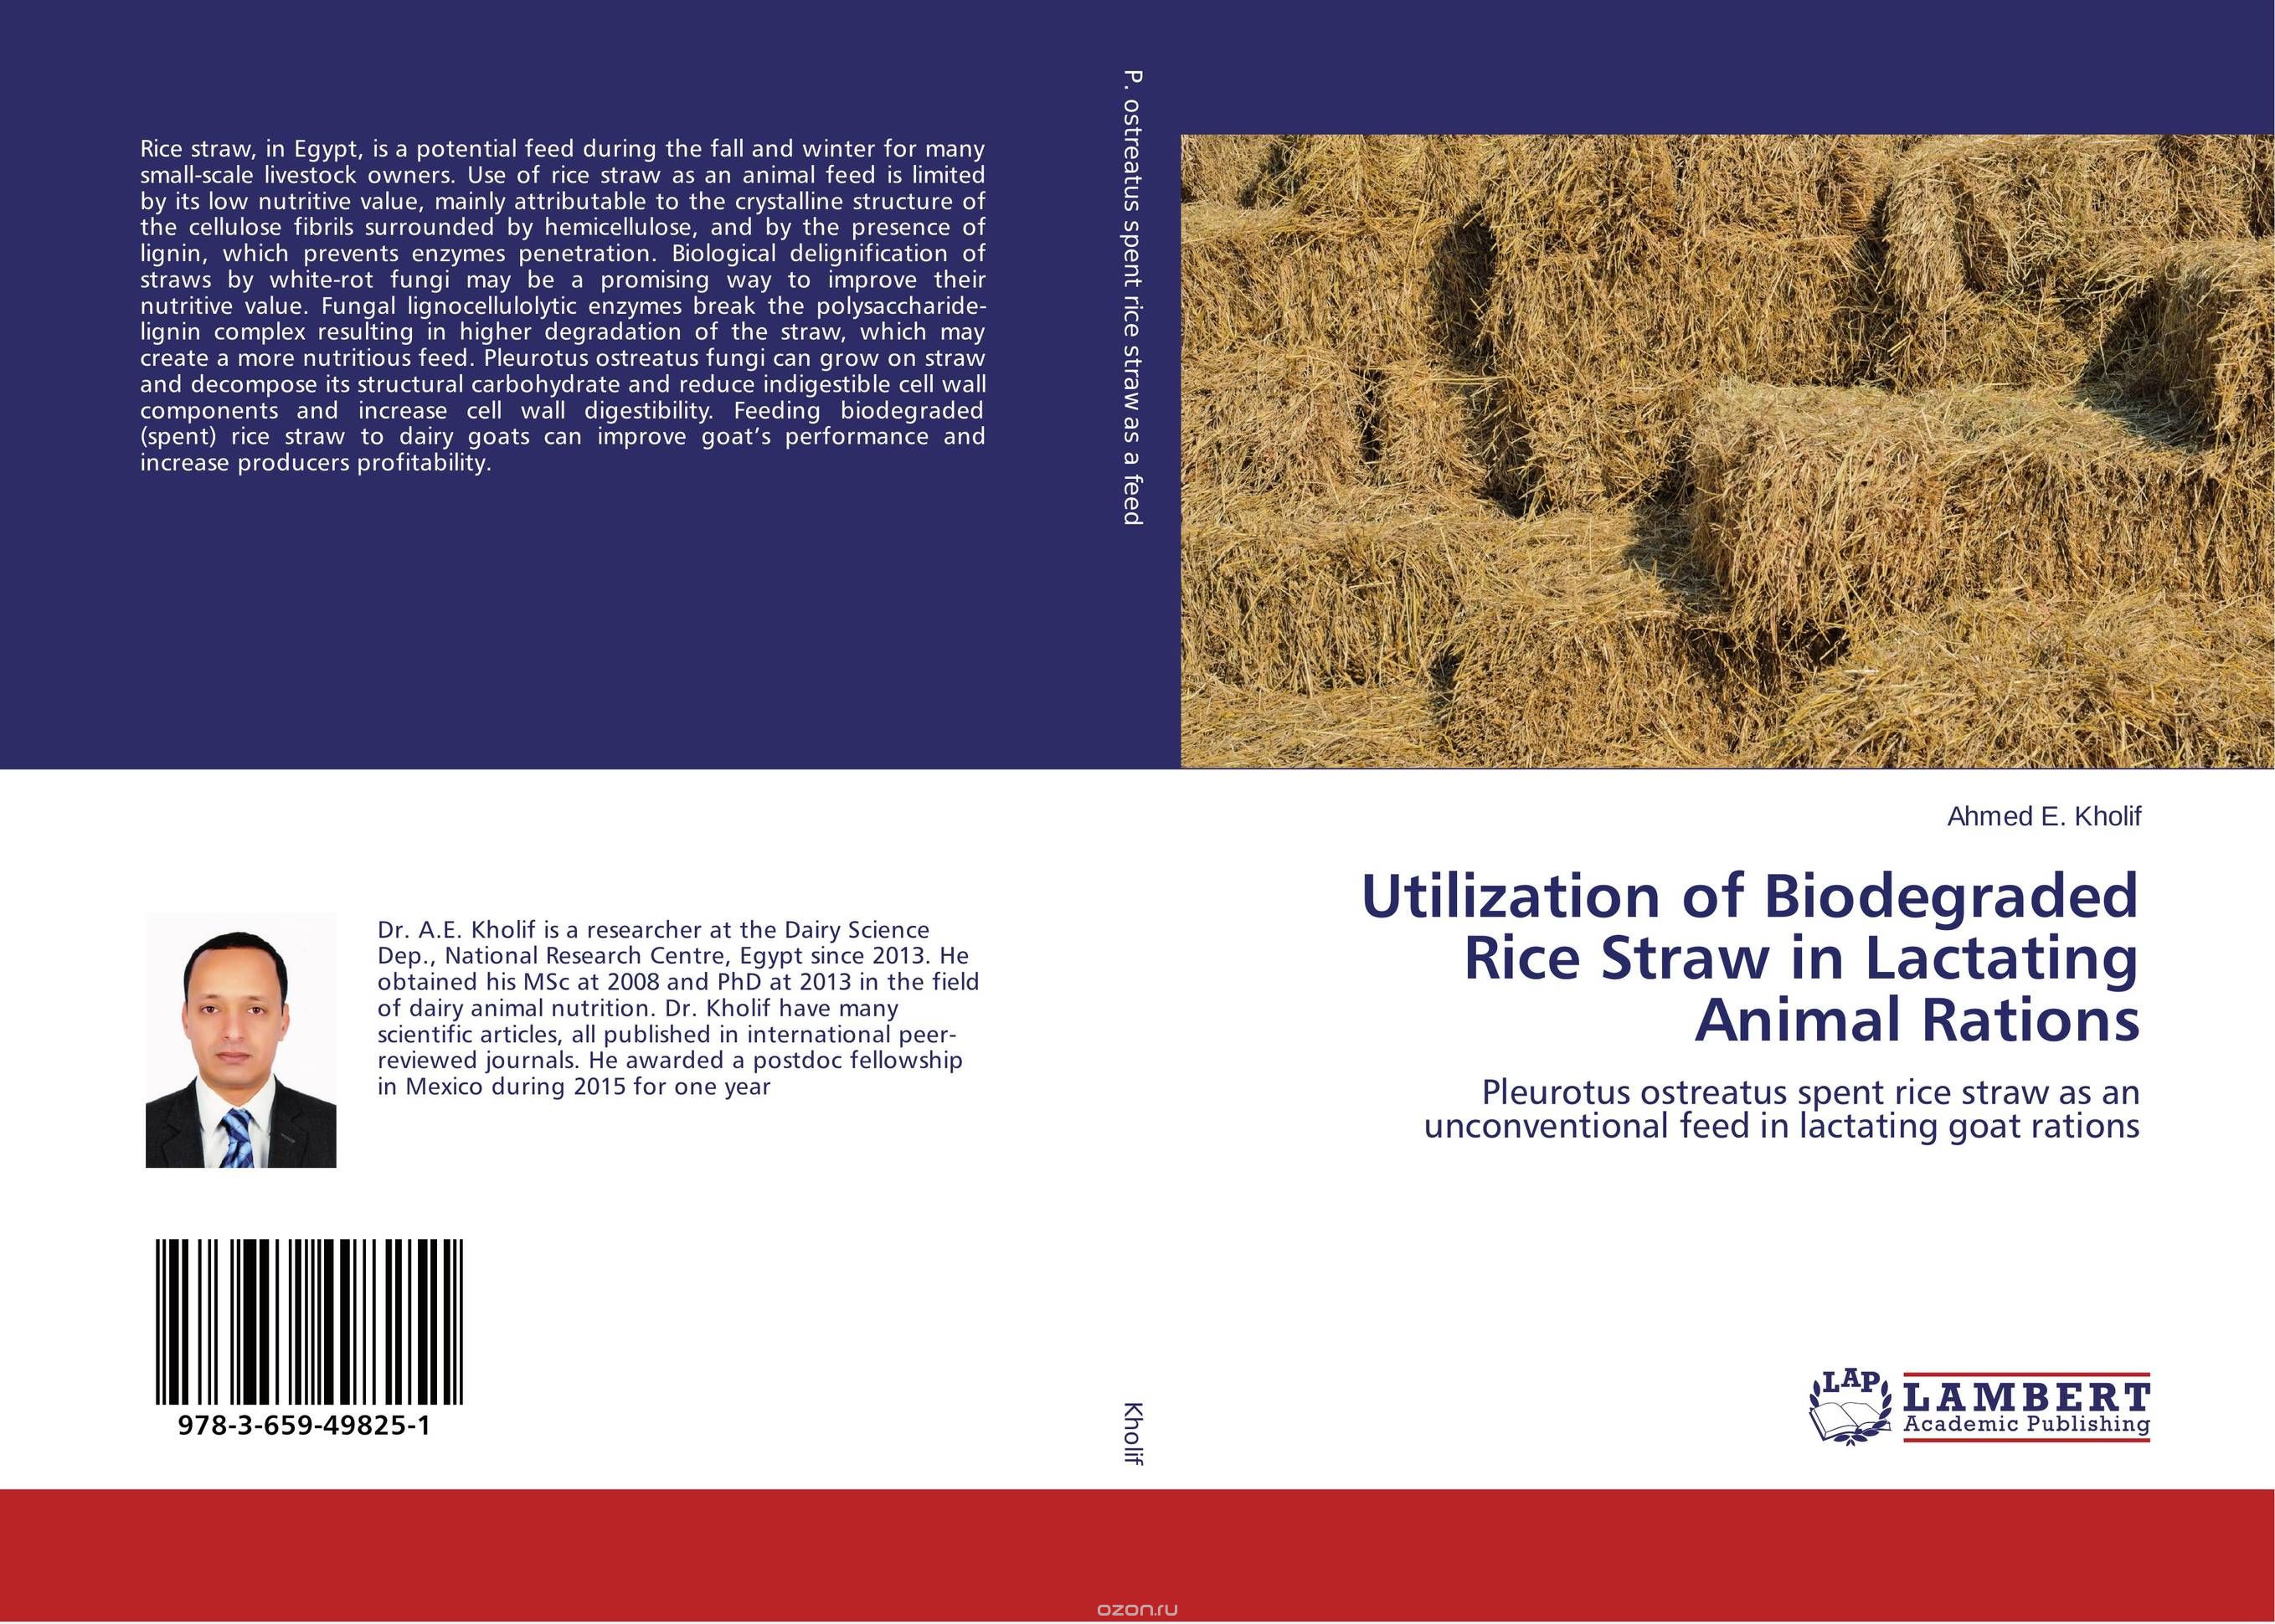 Скачать книгу "Utilization of Biodegraded Rice Straw in Lactating Animal Rations"